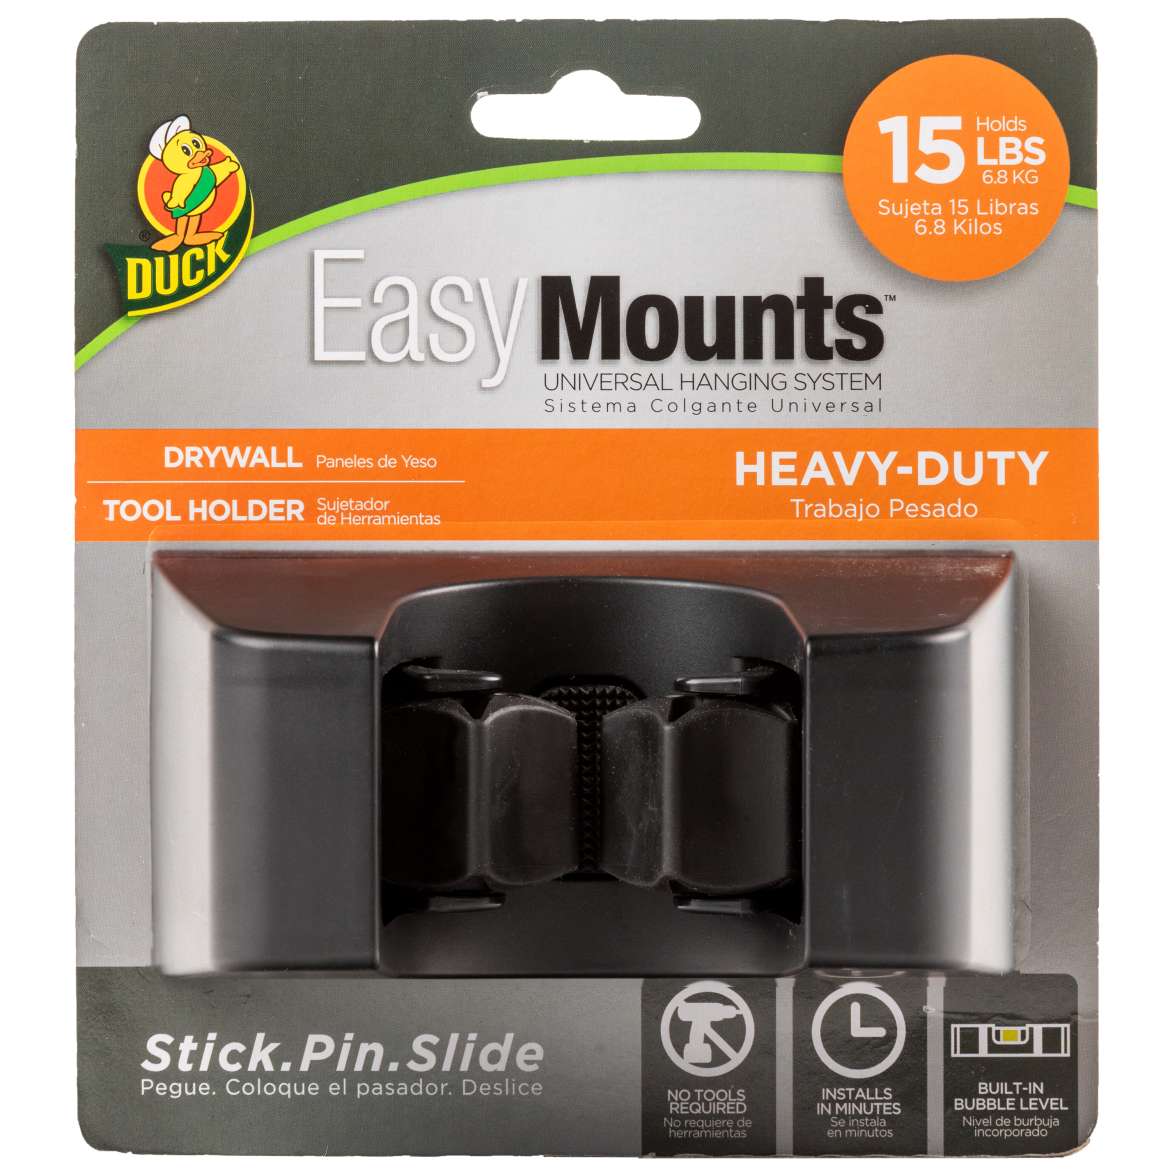 Duck® EasyMounts™ Heavy-Duty Drywall Tool Holder Image